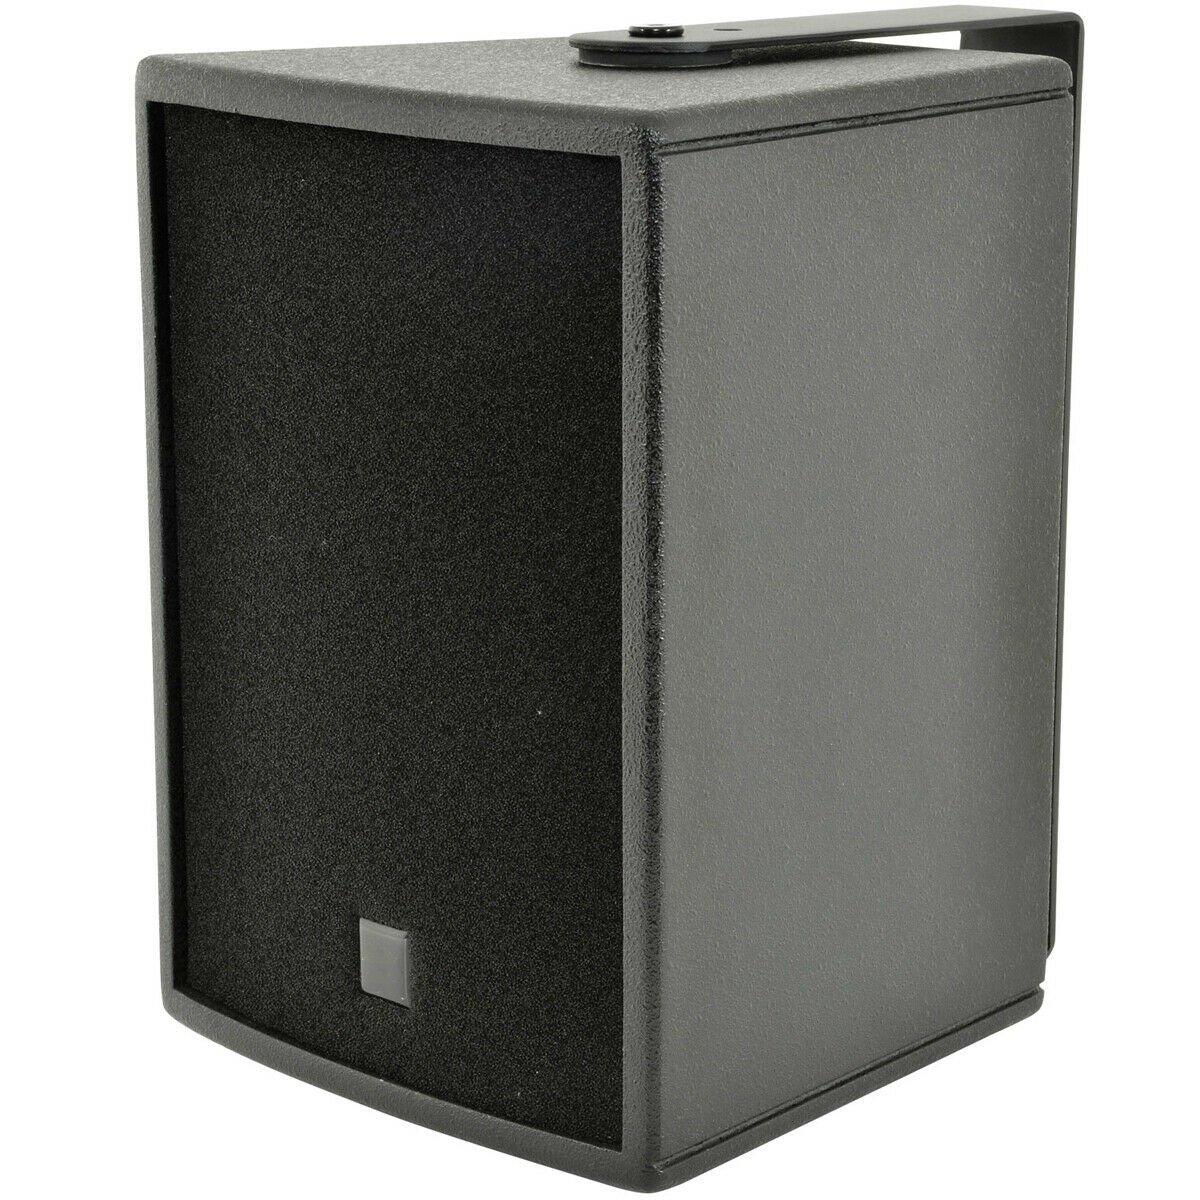 Loops 8" Wooden Cabinet Black Speaker Premium Hi Fi Wall Mounted Background Sound